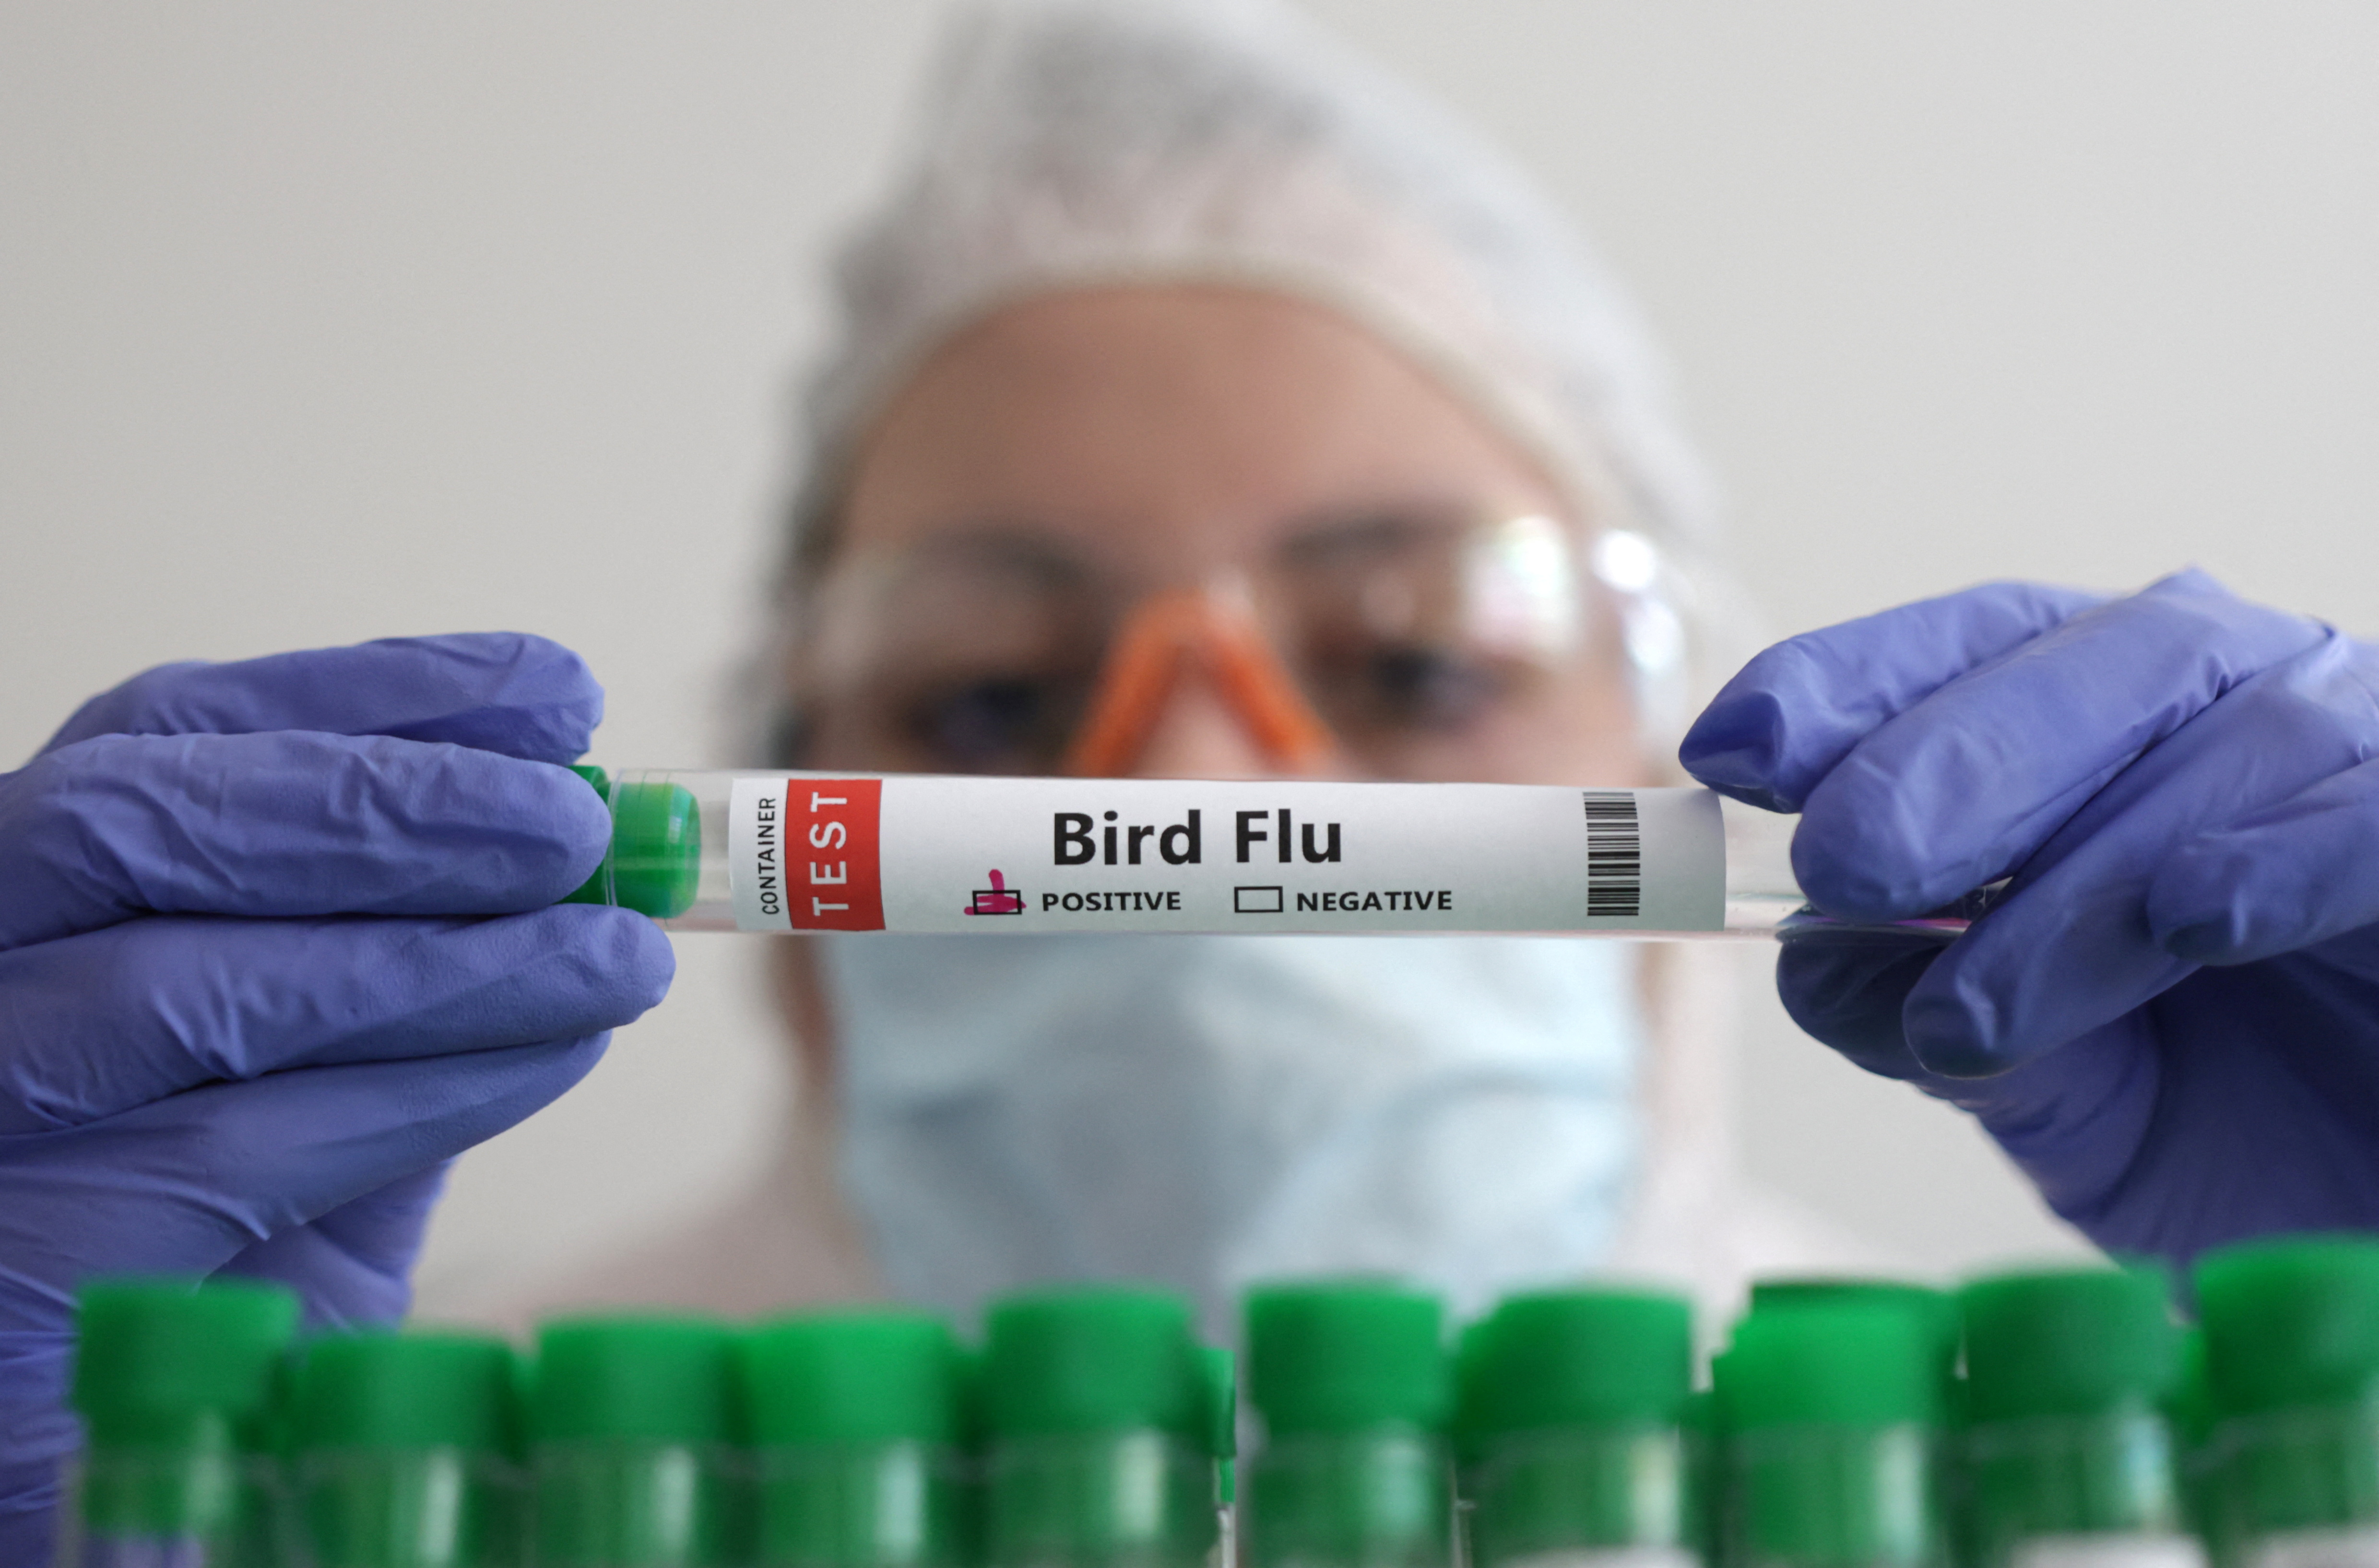 Illustration shows person holding test tube labelled "Bird Flu"